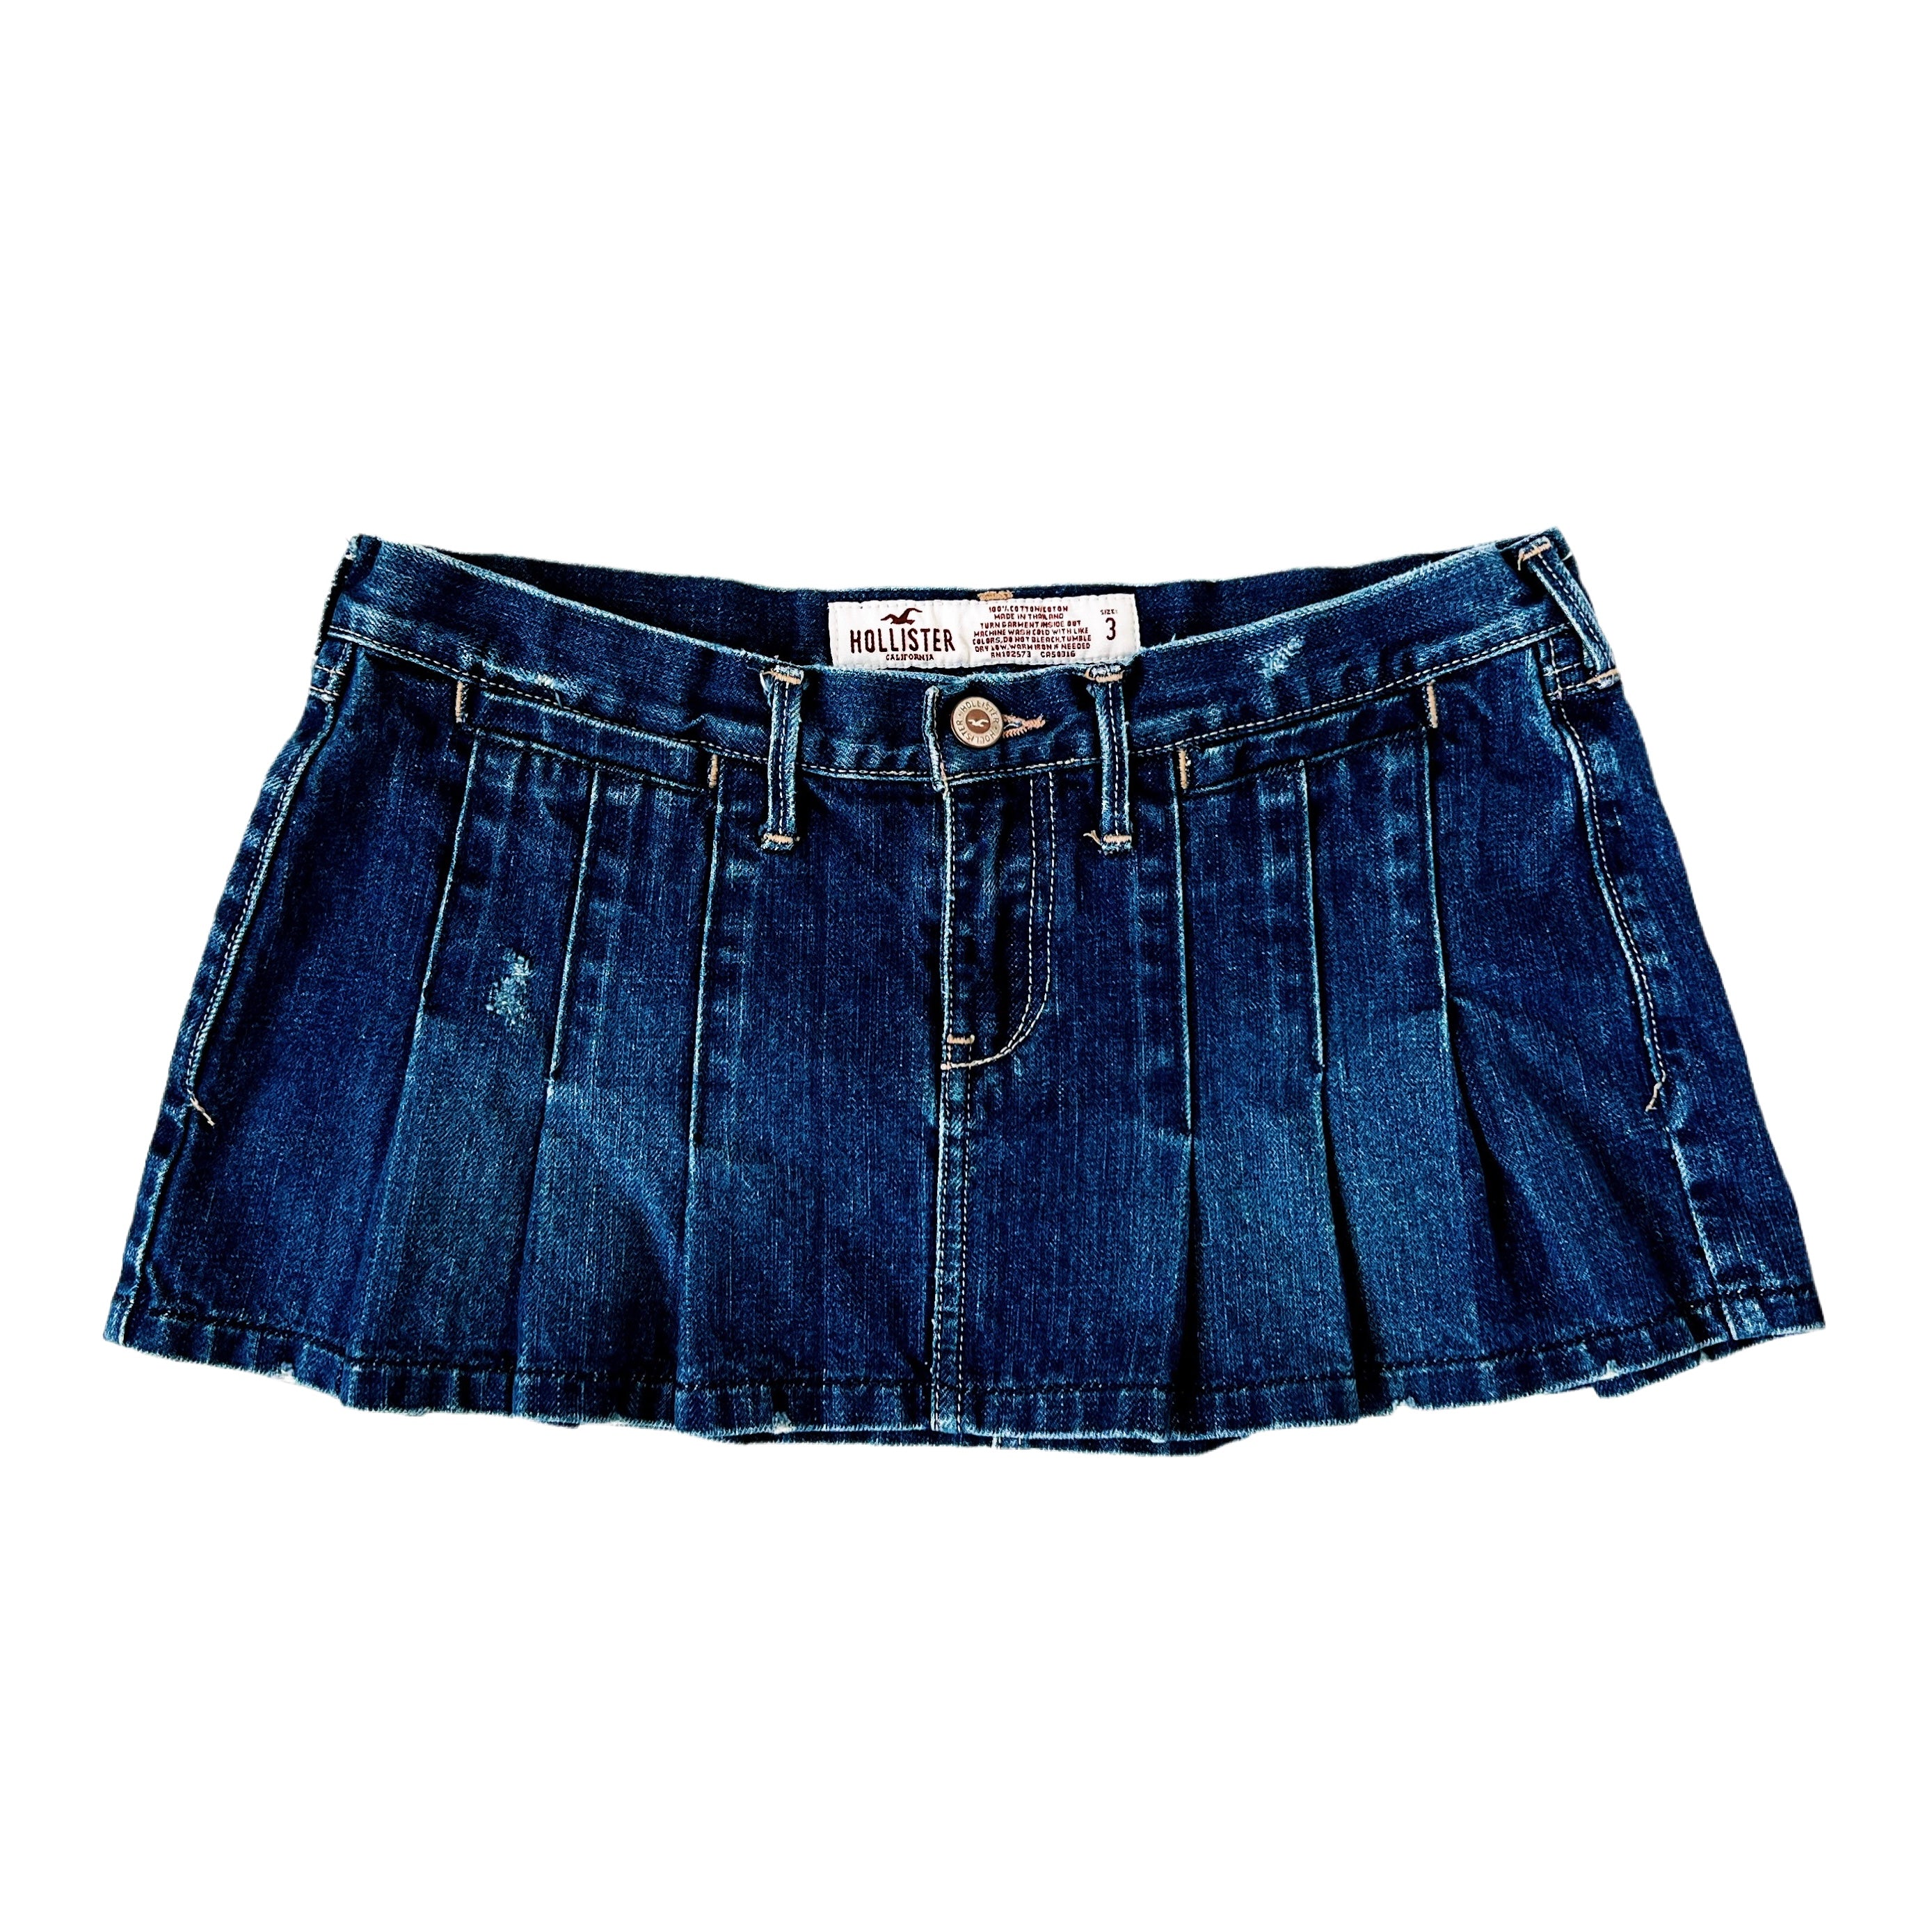 Early 2000s Pleated Denim Mini Skirt (XS)